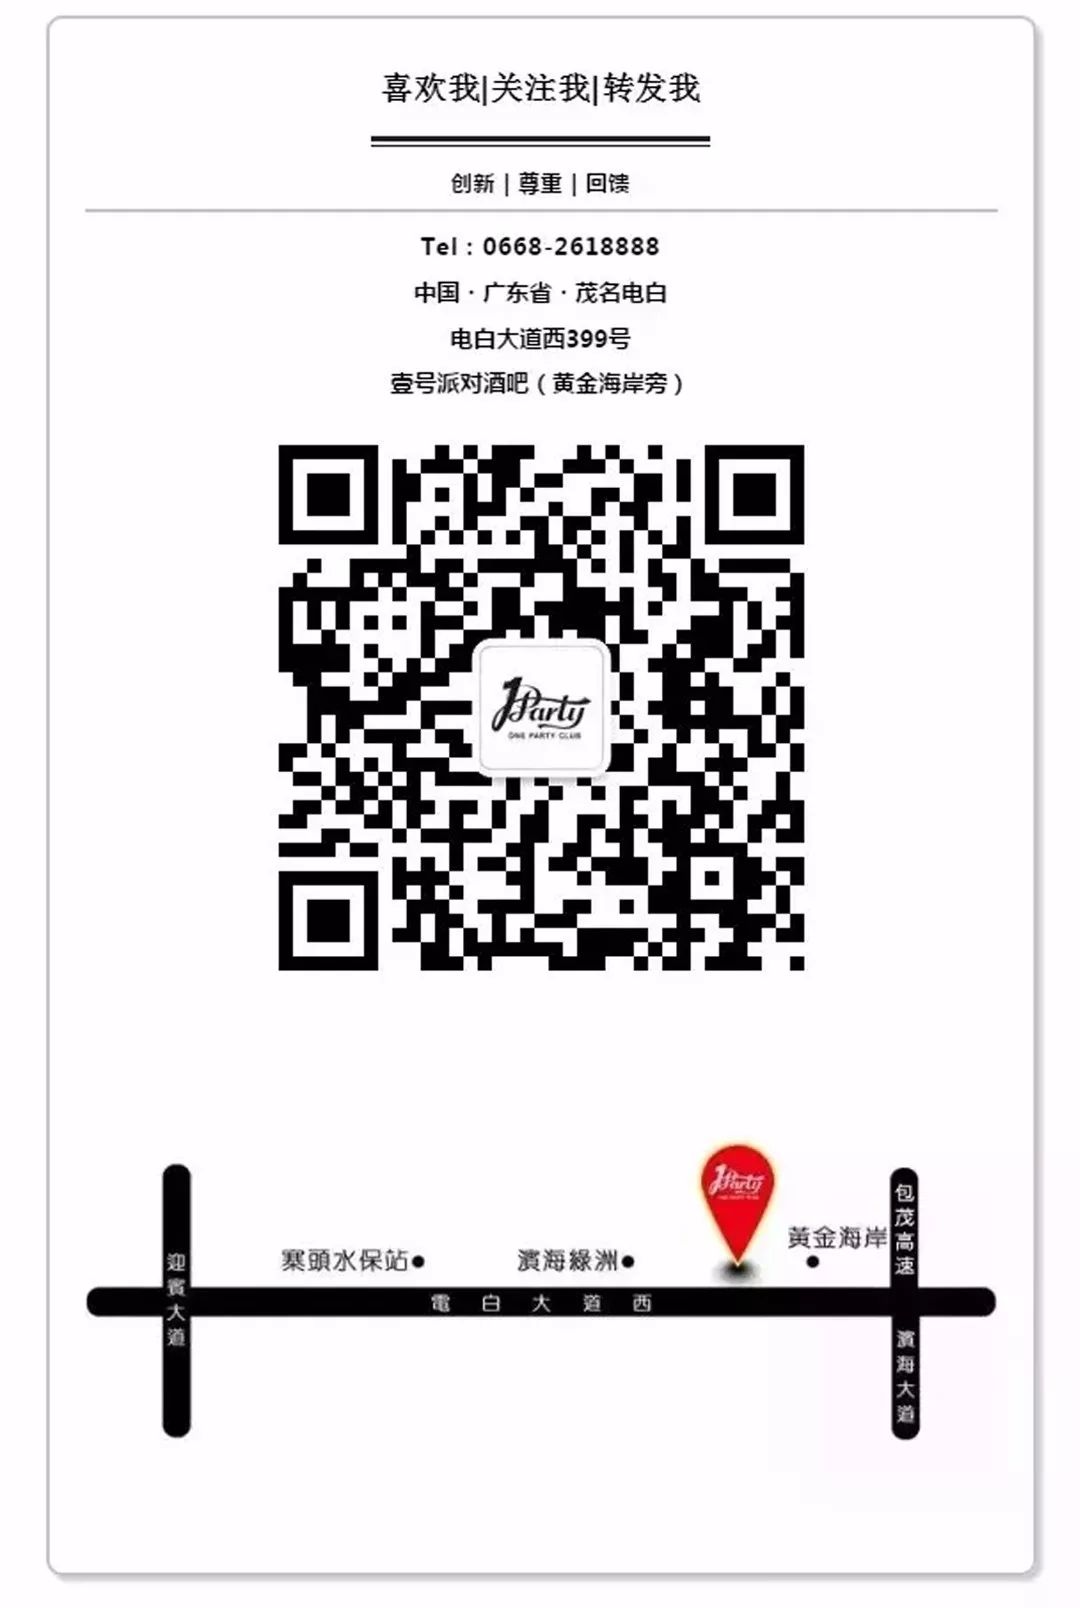 ONE PARTY CLUB | 现场回顾 #香港影星-张静雅 一场引力极强的视觉盛宴-茂名壹号派对酒吧/ONE PARTY